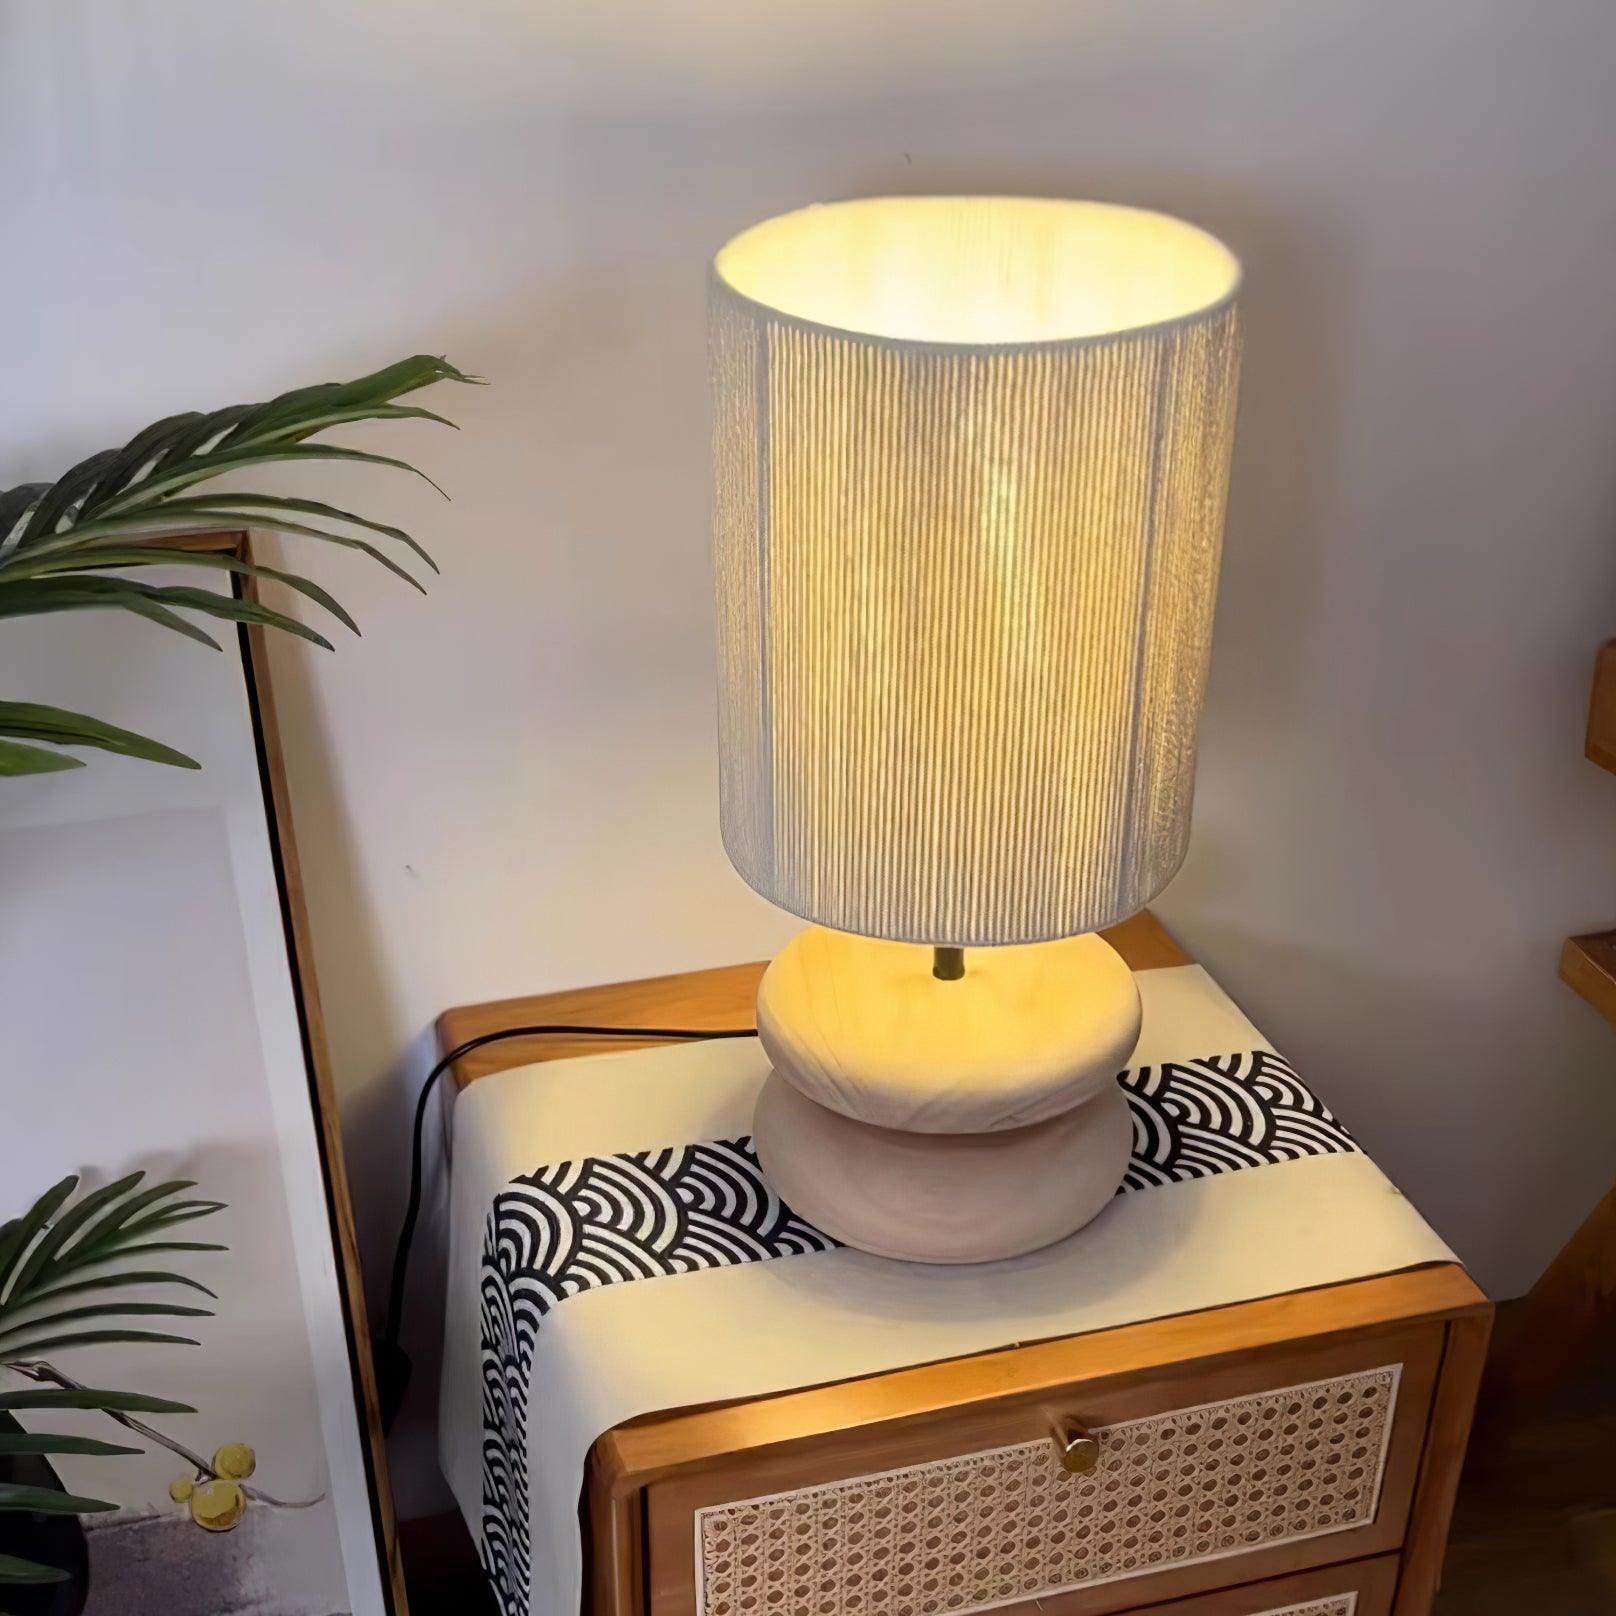 Wooden Modern Bedroom Table Lamp